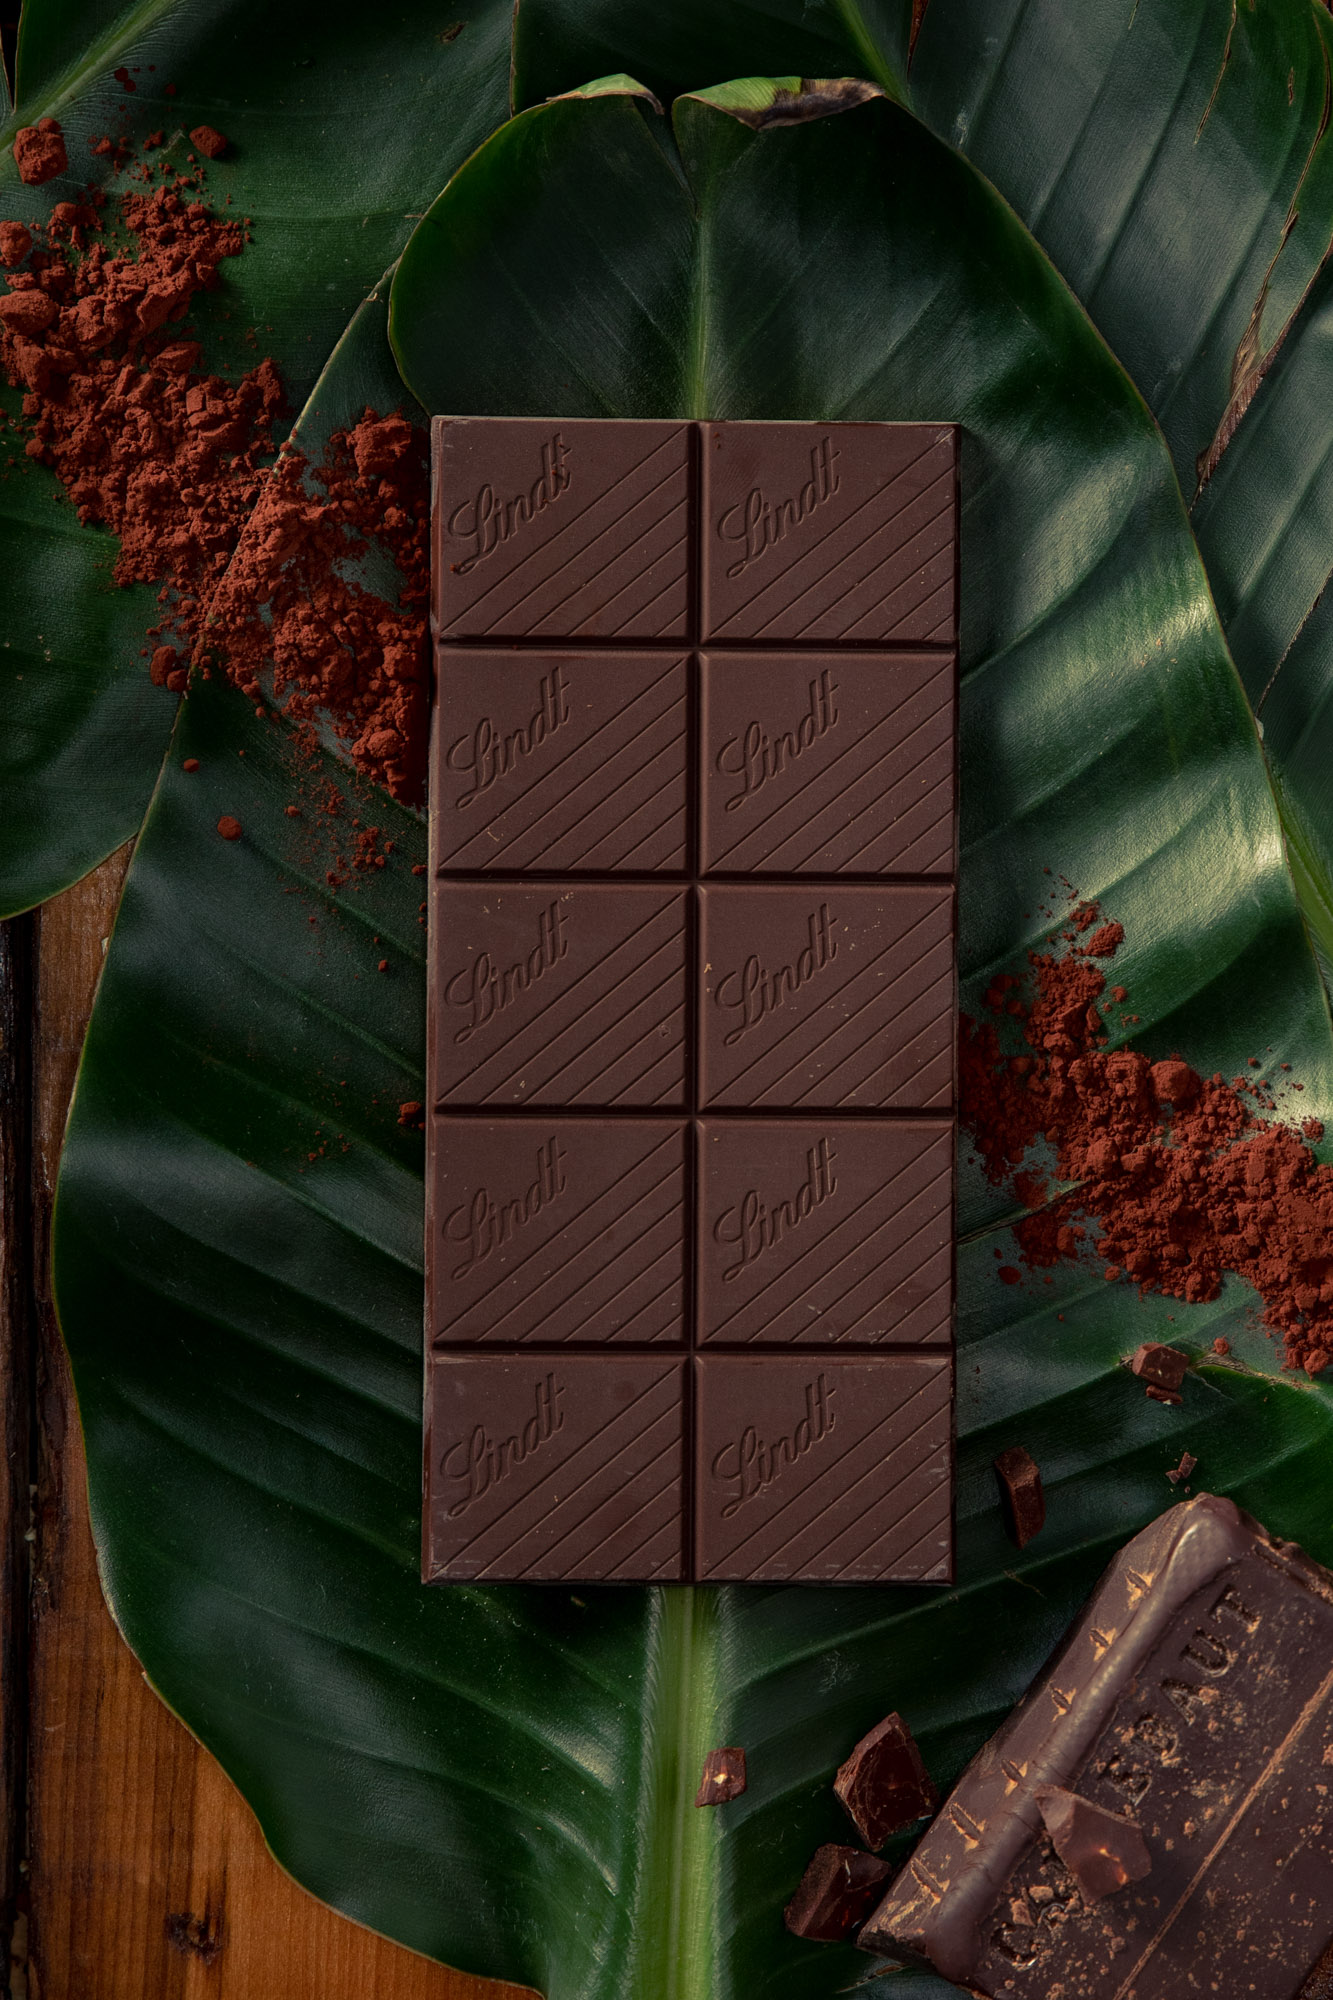 Food styling of dark chocolate